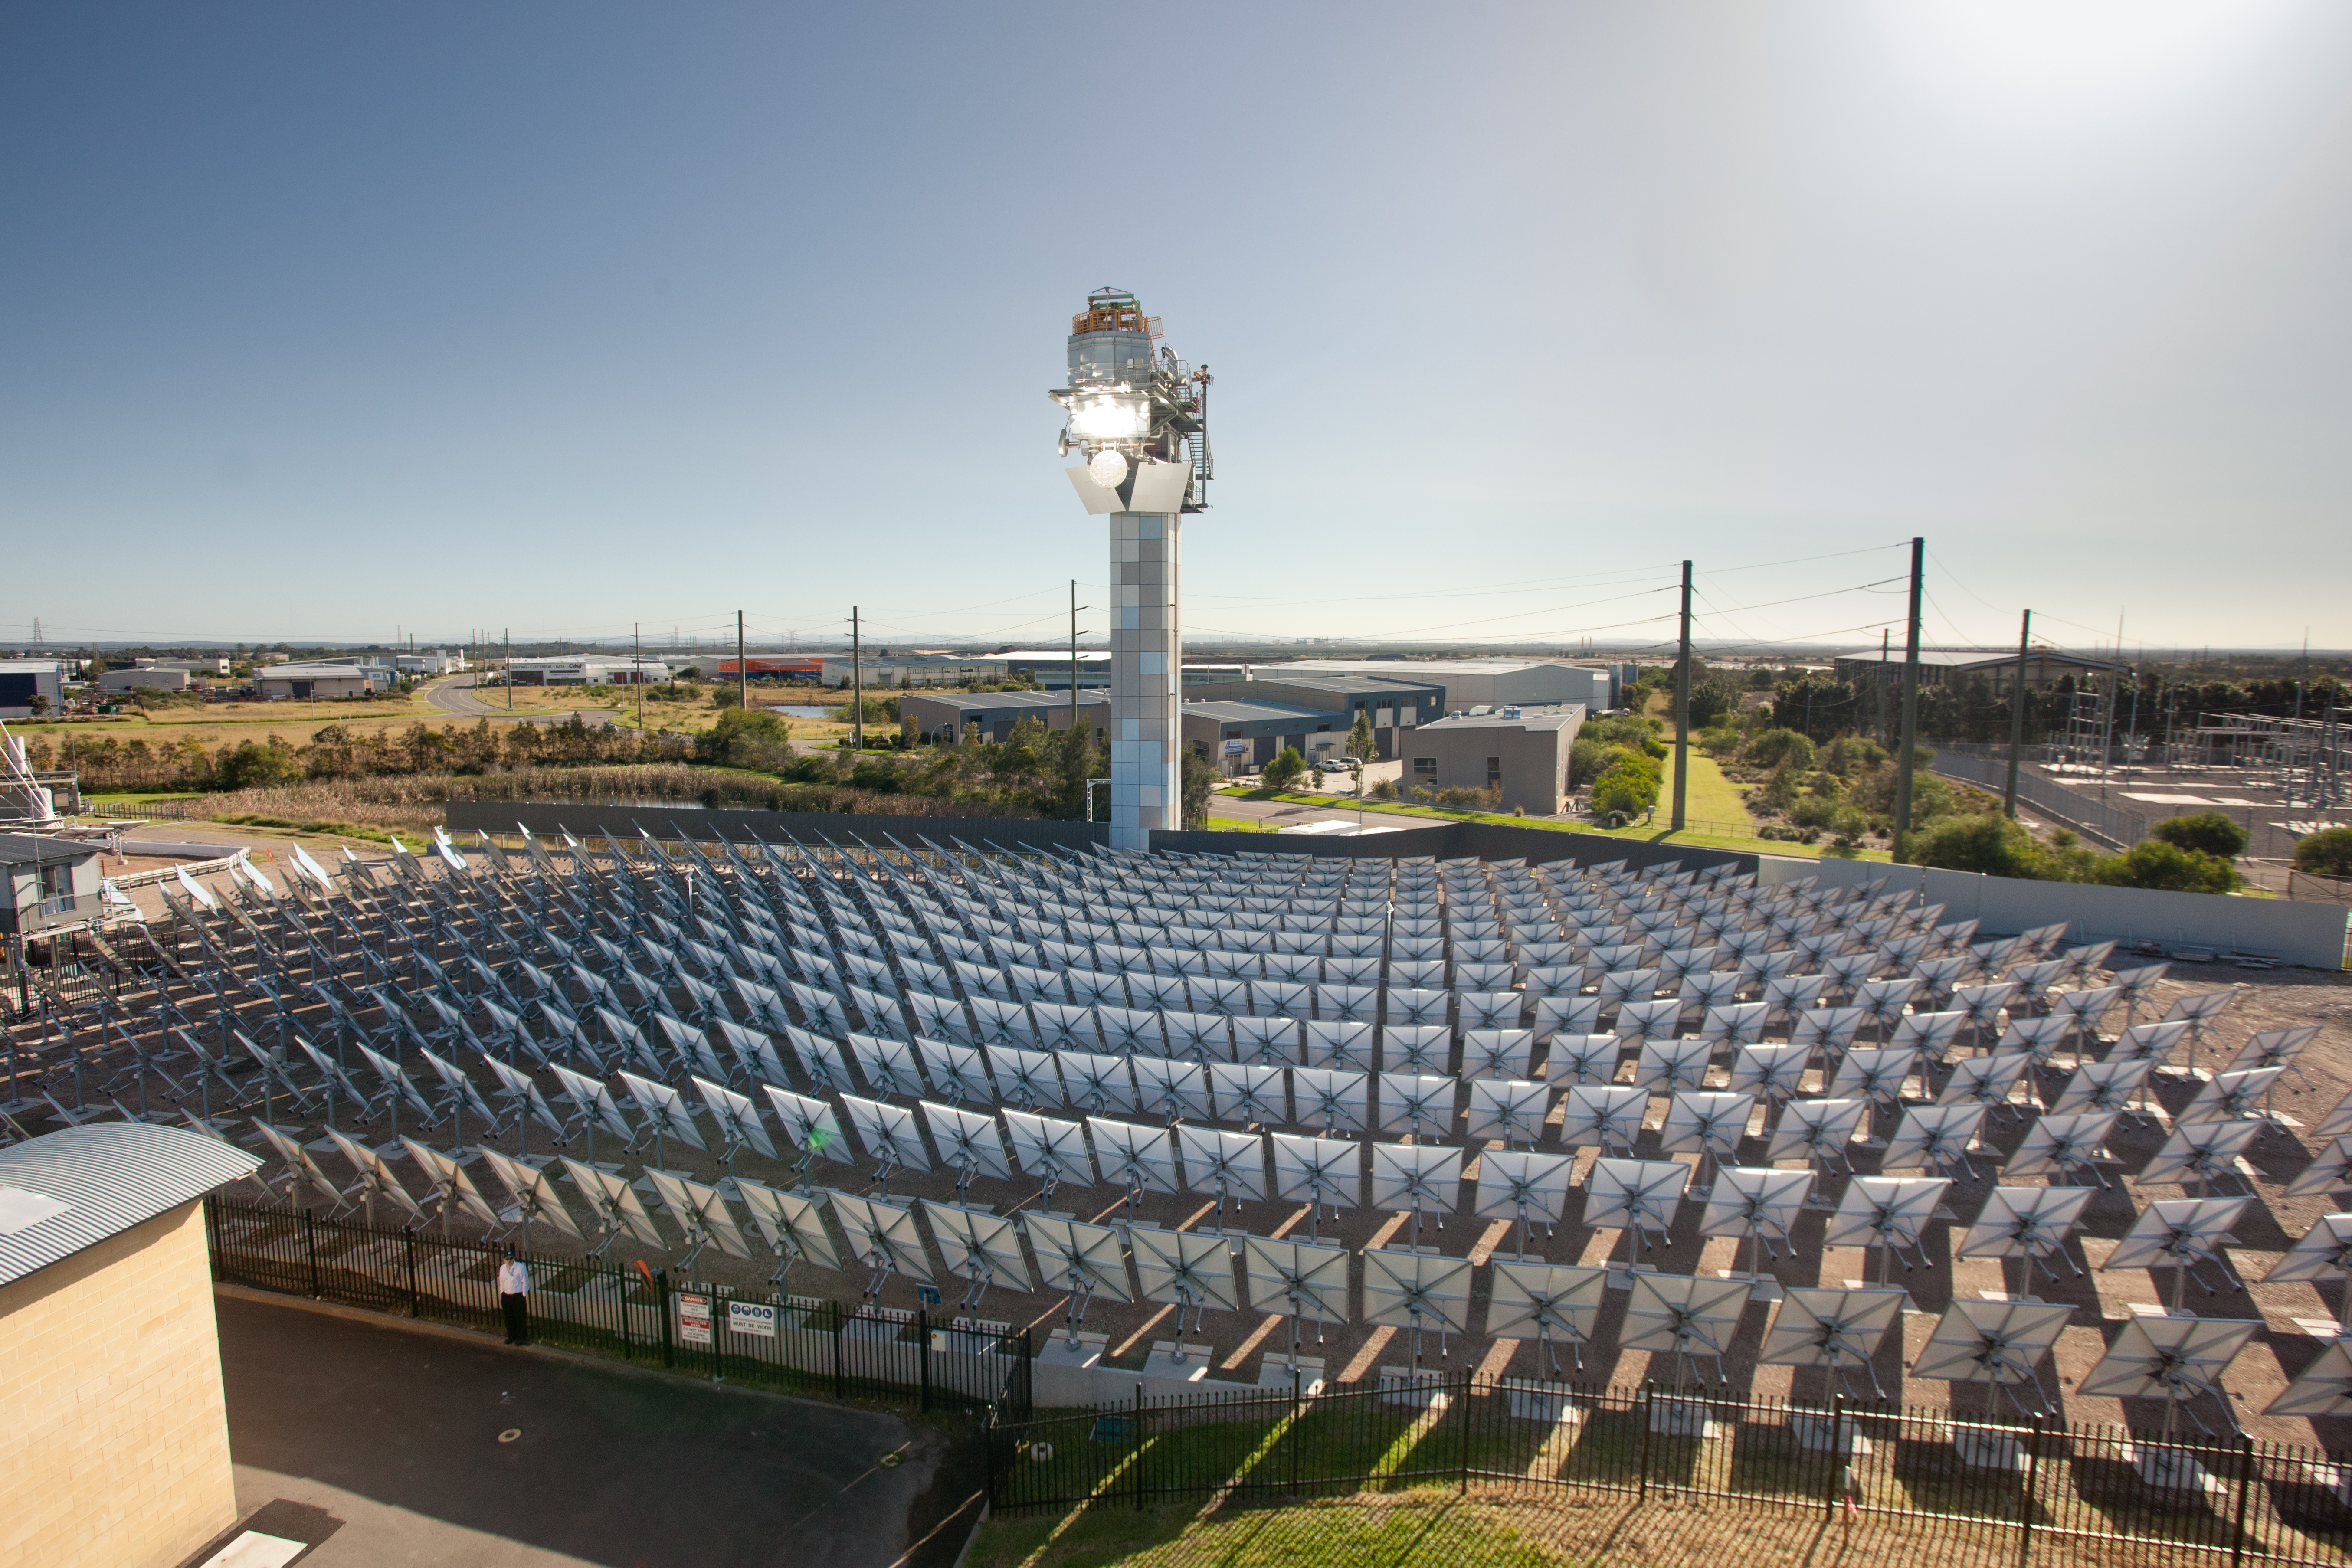 Solar array at the CSIRO. (Source: CSIRO)